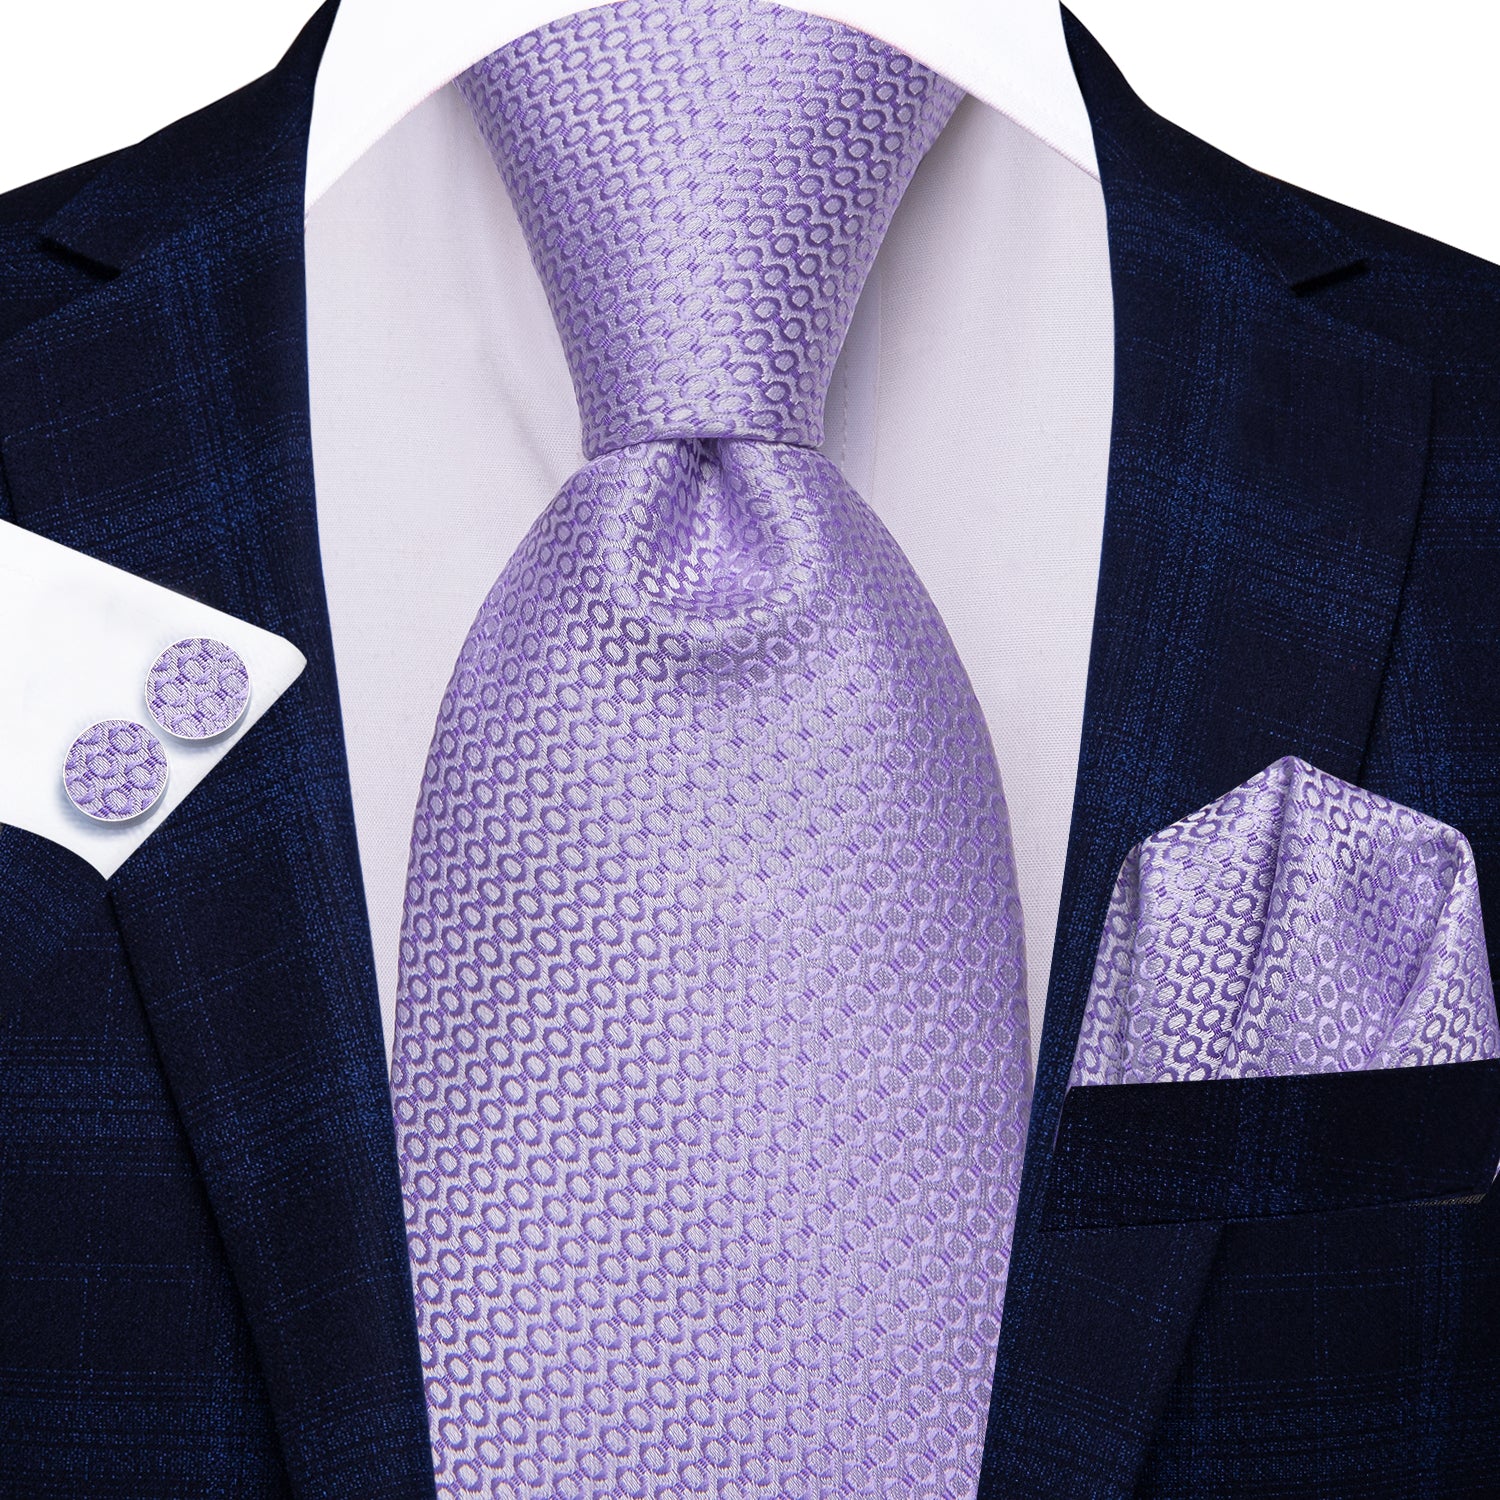 Hi-Tie Taro Purple Novelty Men's Tie Pocket Square Cufflinks Set